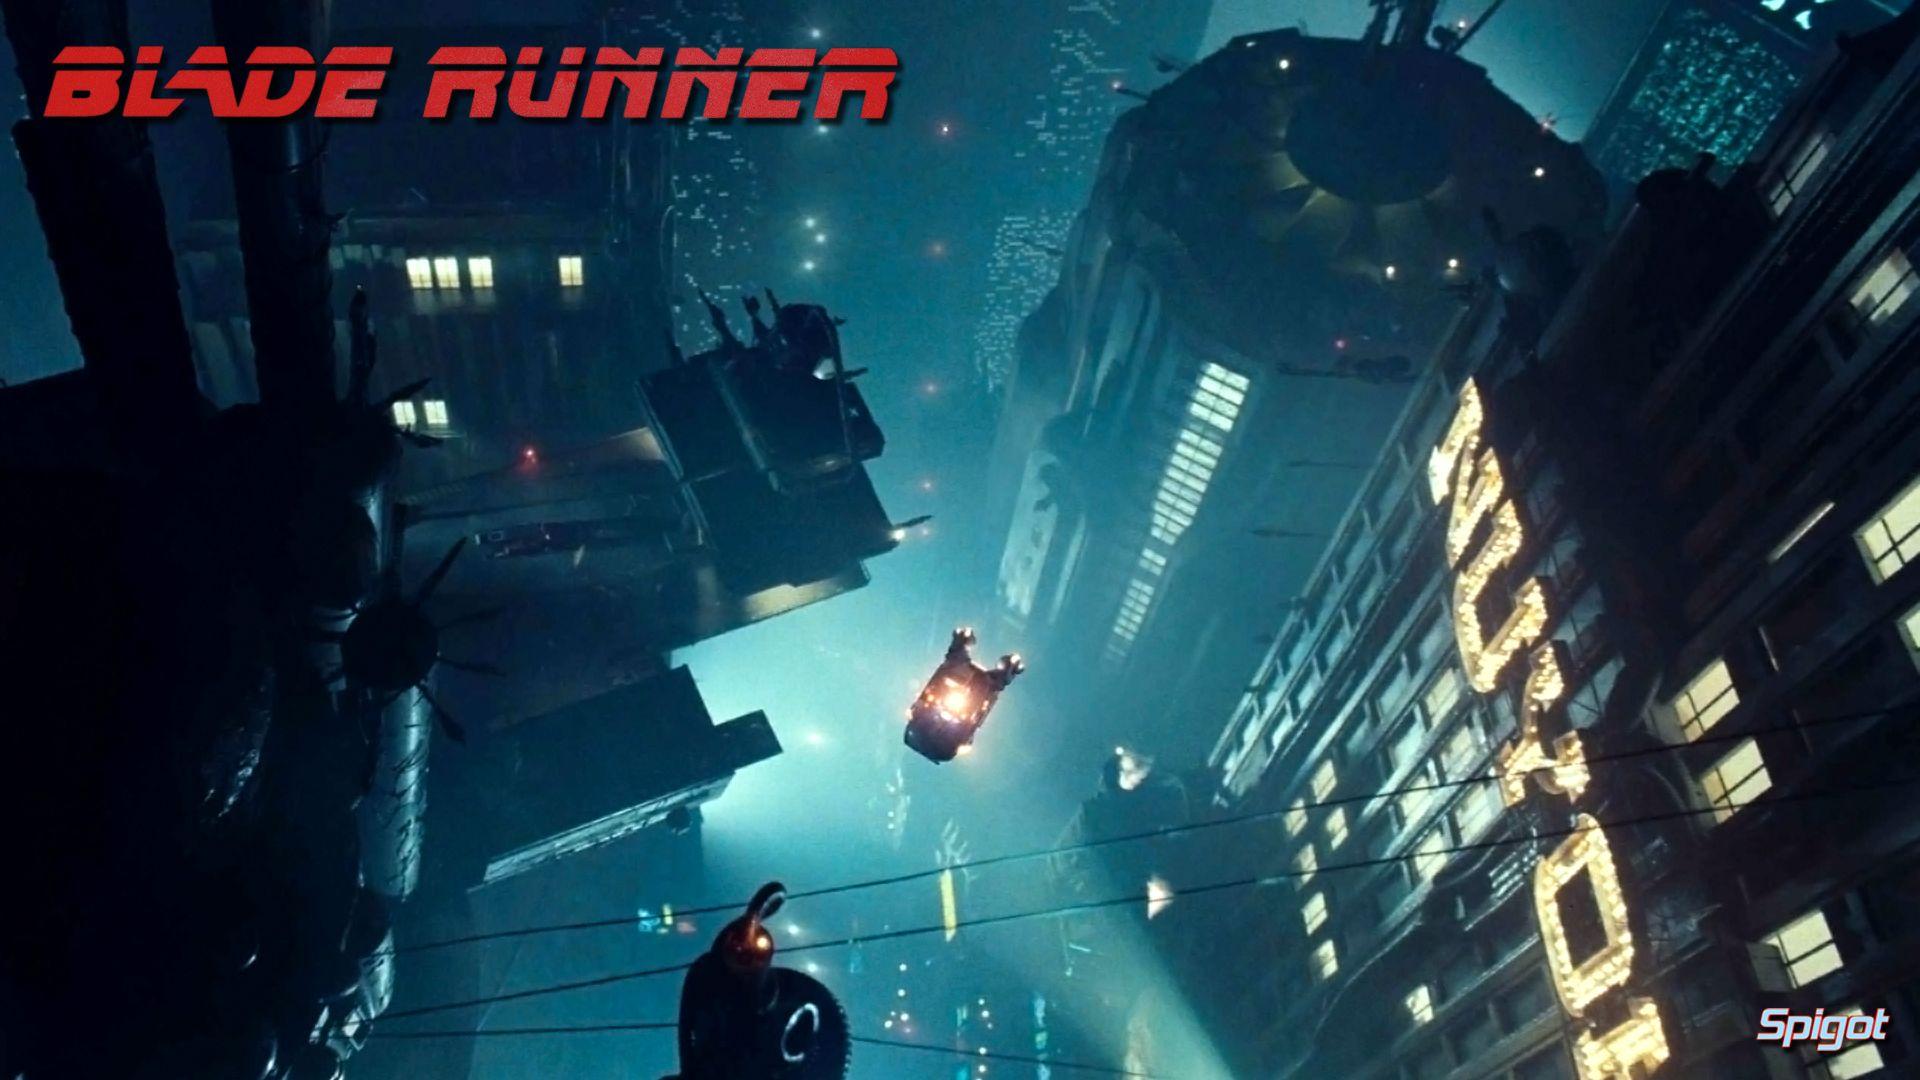 Blade Runner Wallpaper. George Spigot&;s Blog